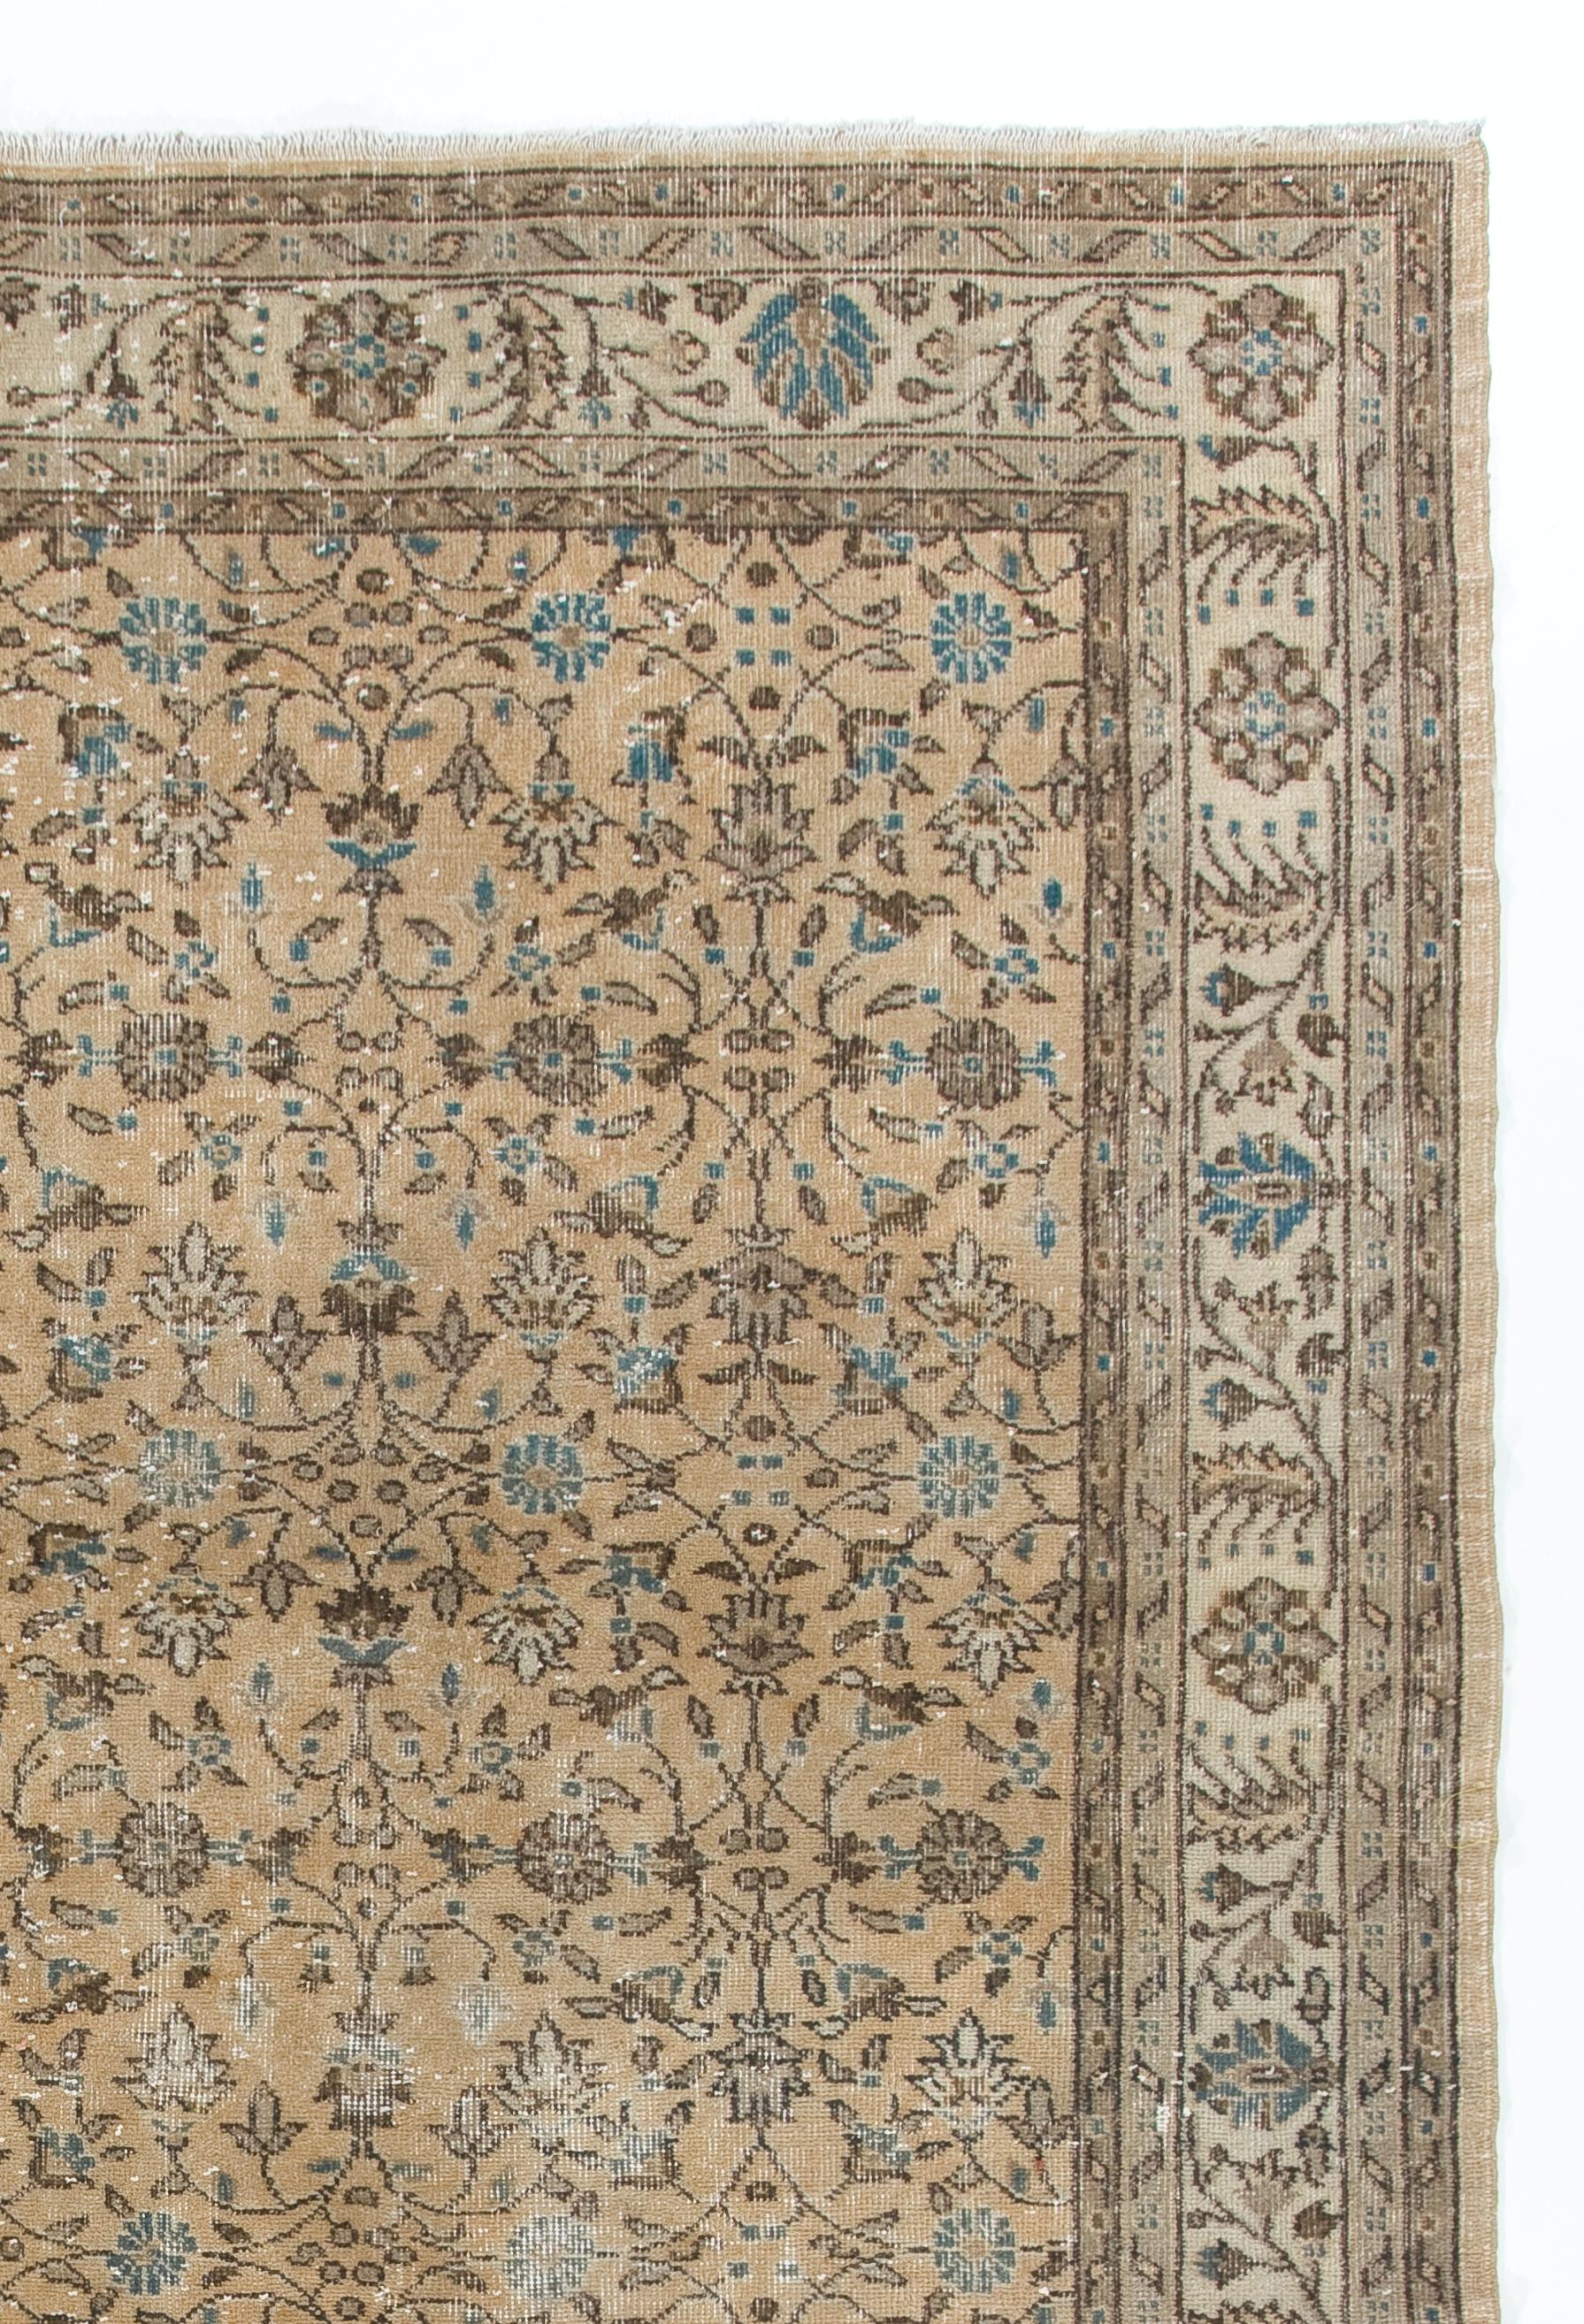 Oushak 7.5x11 Ft Vintage Turkish Wool Rug with Floral Design. Handmade Oriental Carpet For Sale